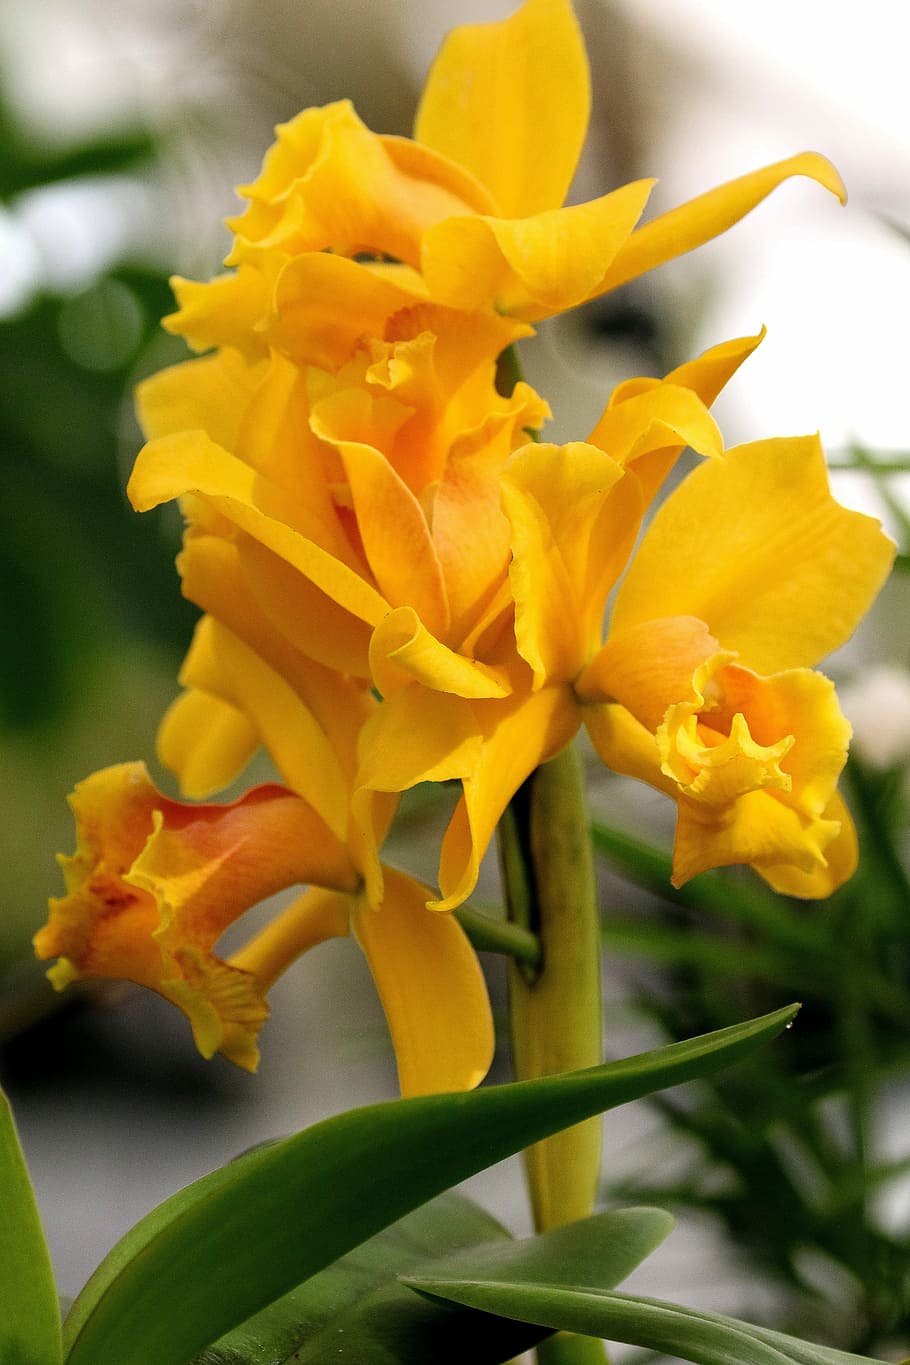 Orquídea, Amarelo, Flor, Floral, Botânica, planta, natureza, botânico, verde, Nova Jersey